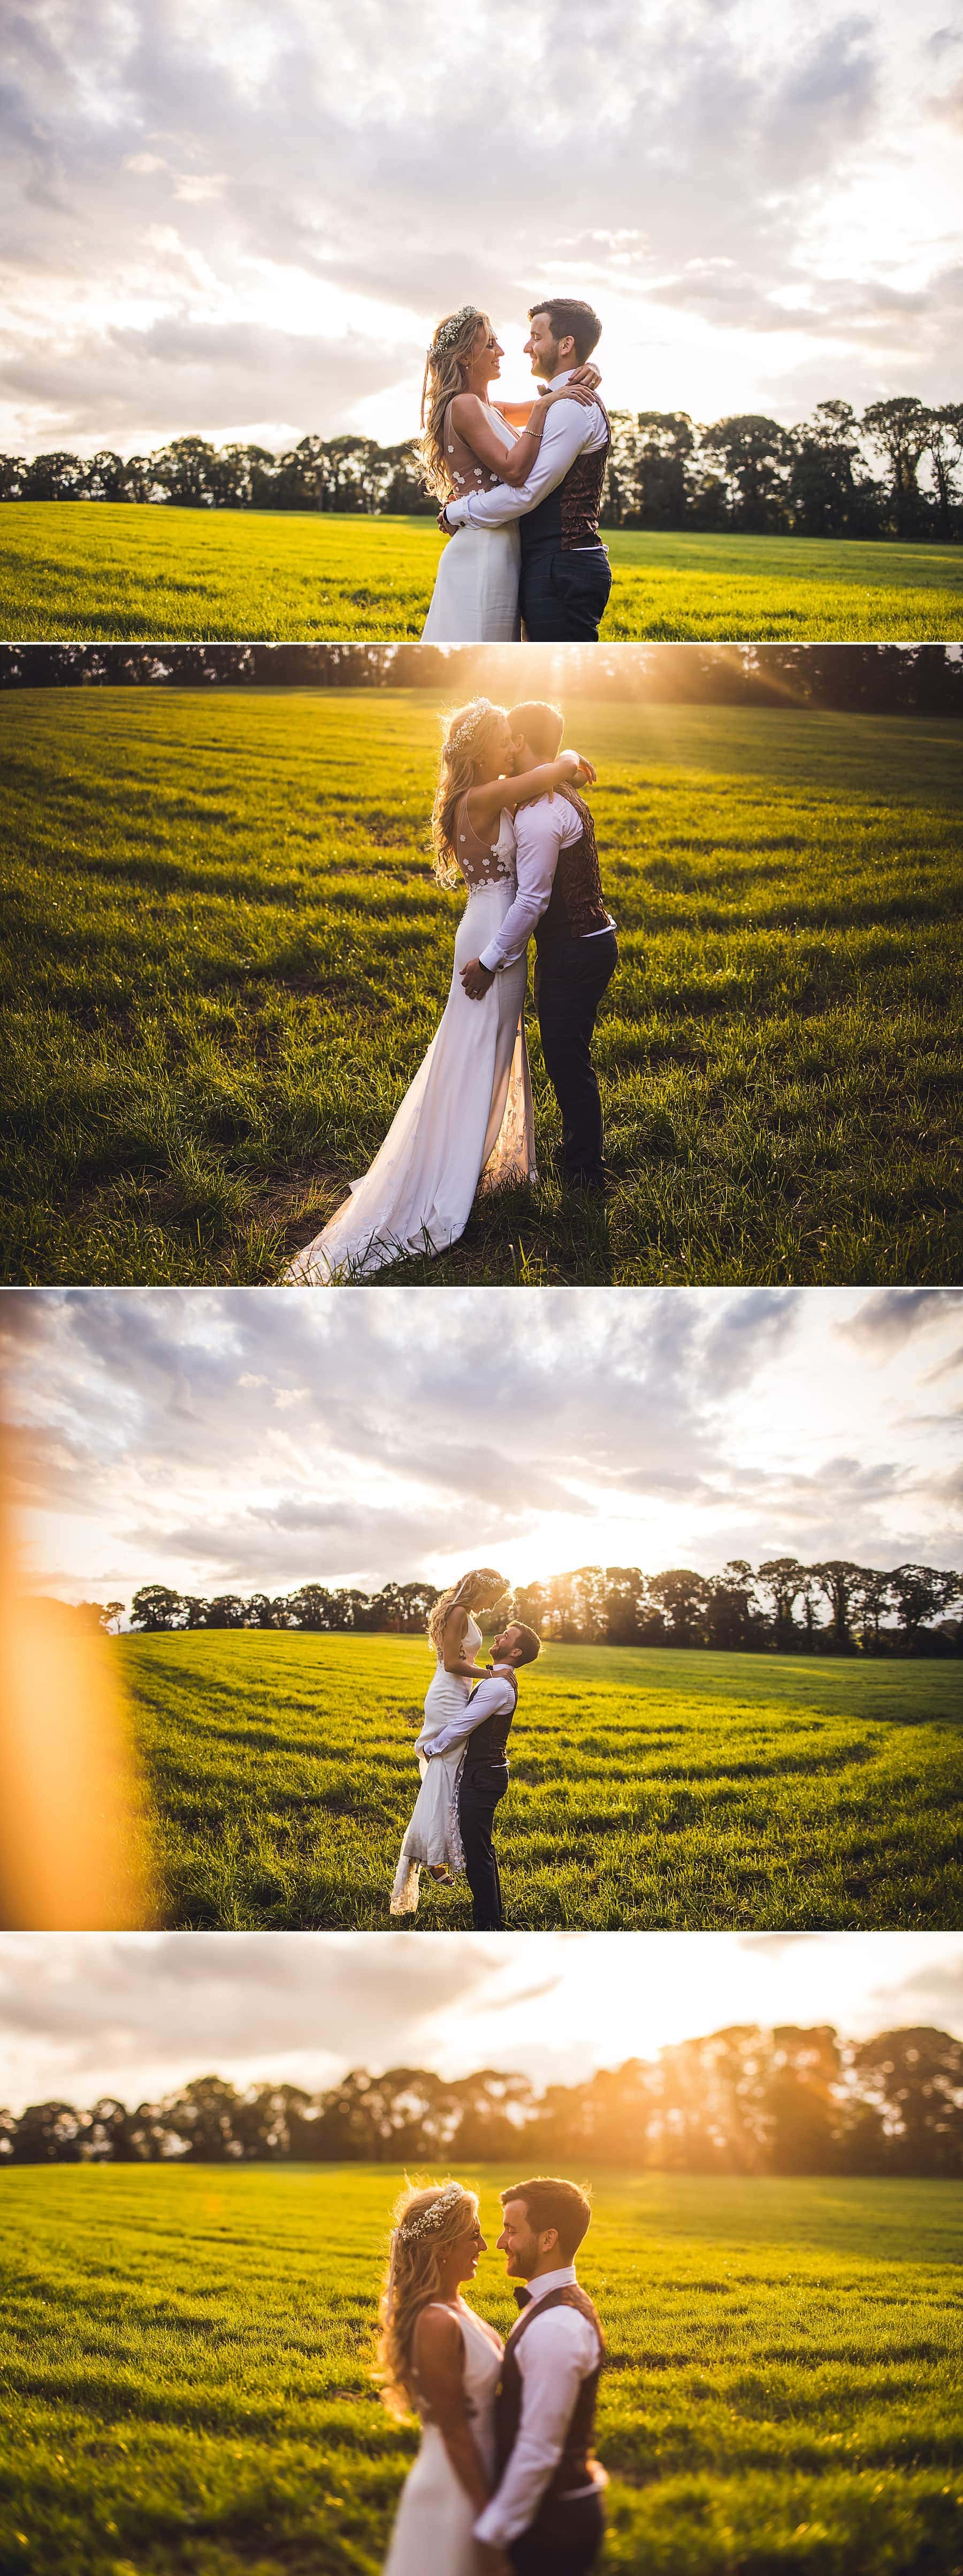 Ballyscullion Park Wedding,Northern Ireland Wedding Photographer,Navyblur Photography,